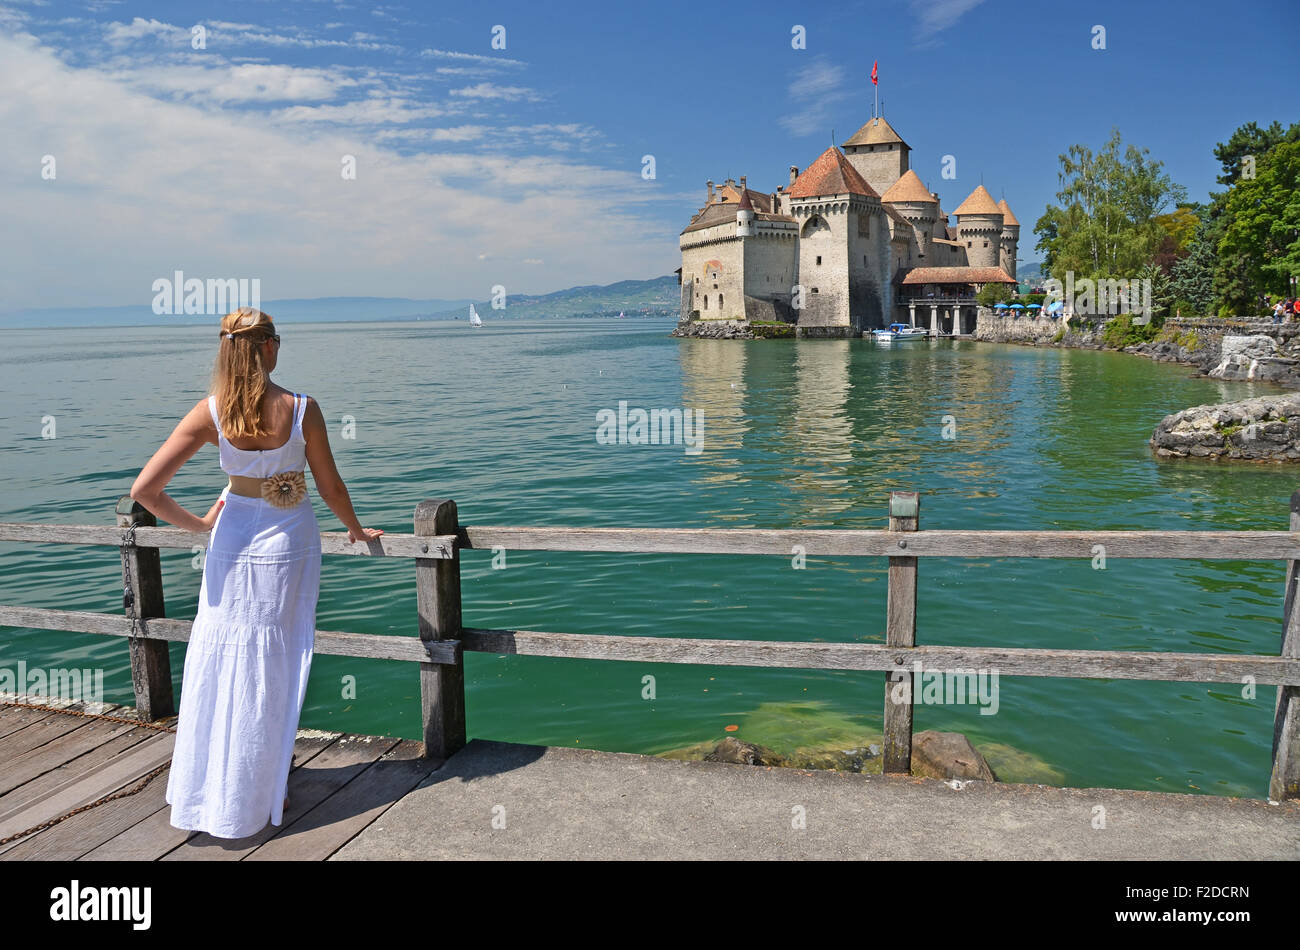 Girl looking at Chillion castle. Geneva lake, Switzerland Stock Photo